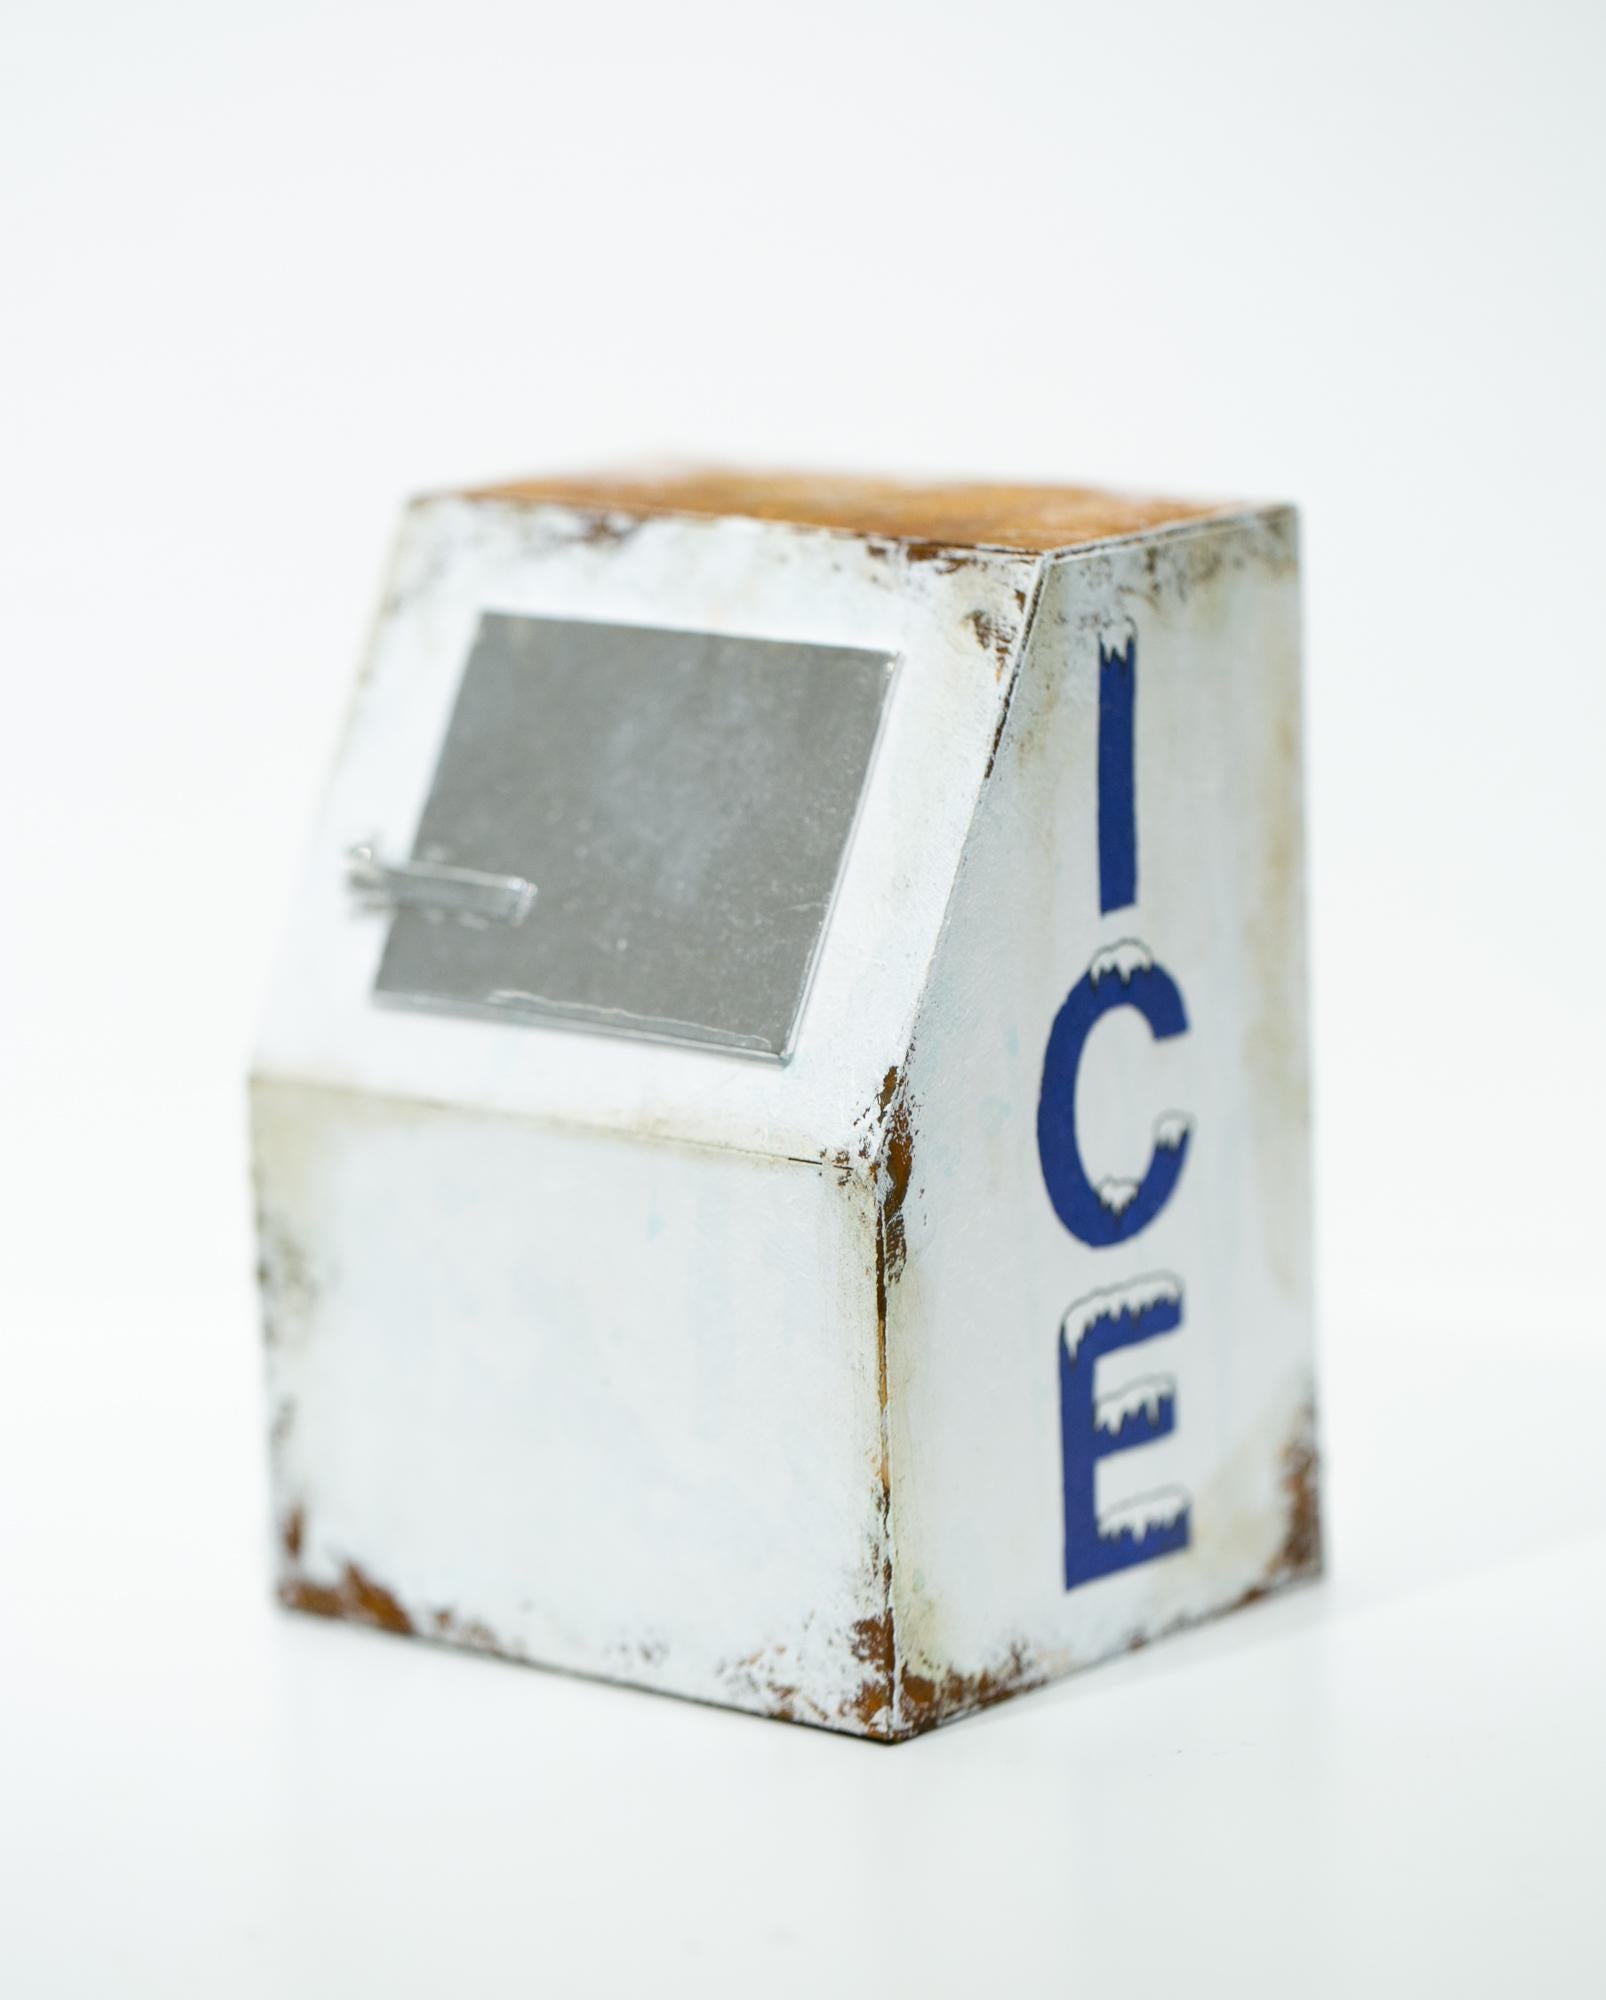 Drew Leshko Still-Life Sculpture - "Ice Box, " Miniature, Architecture, Sculpture